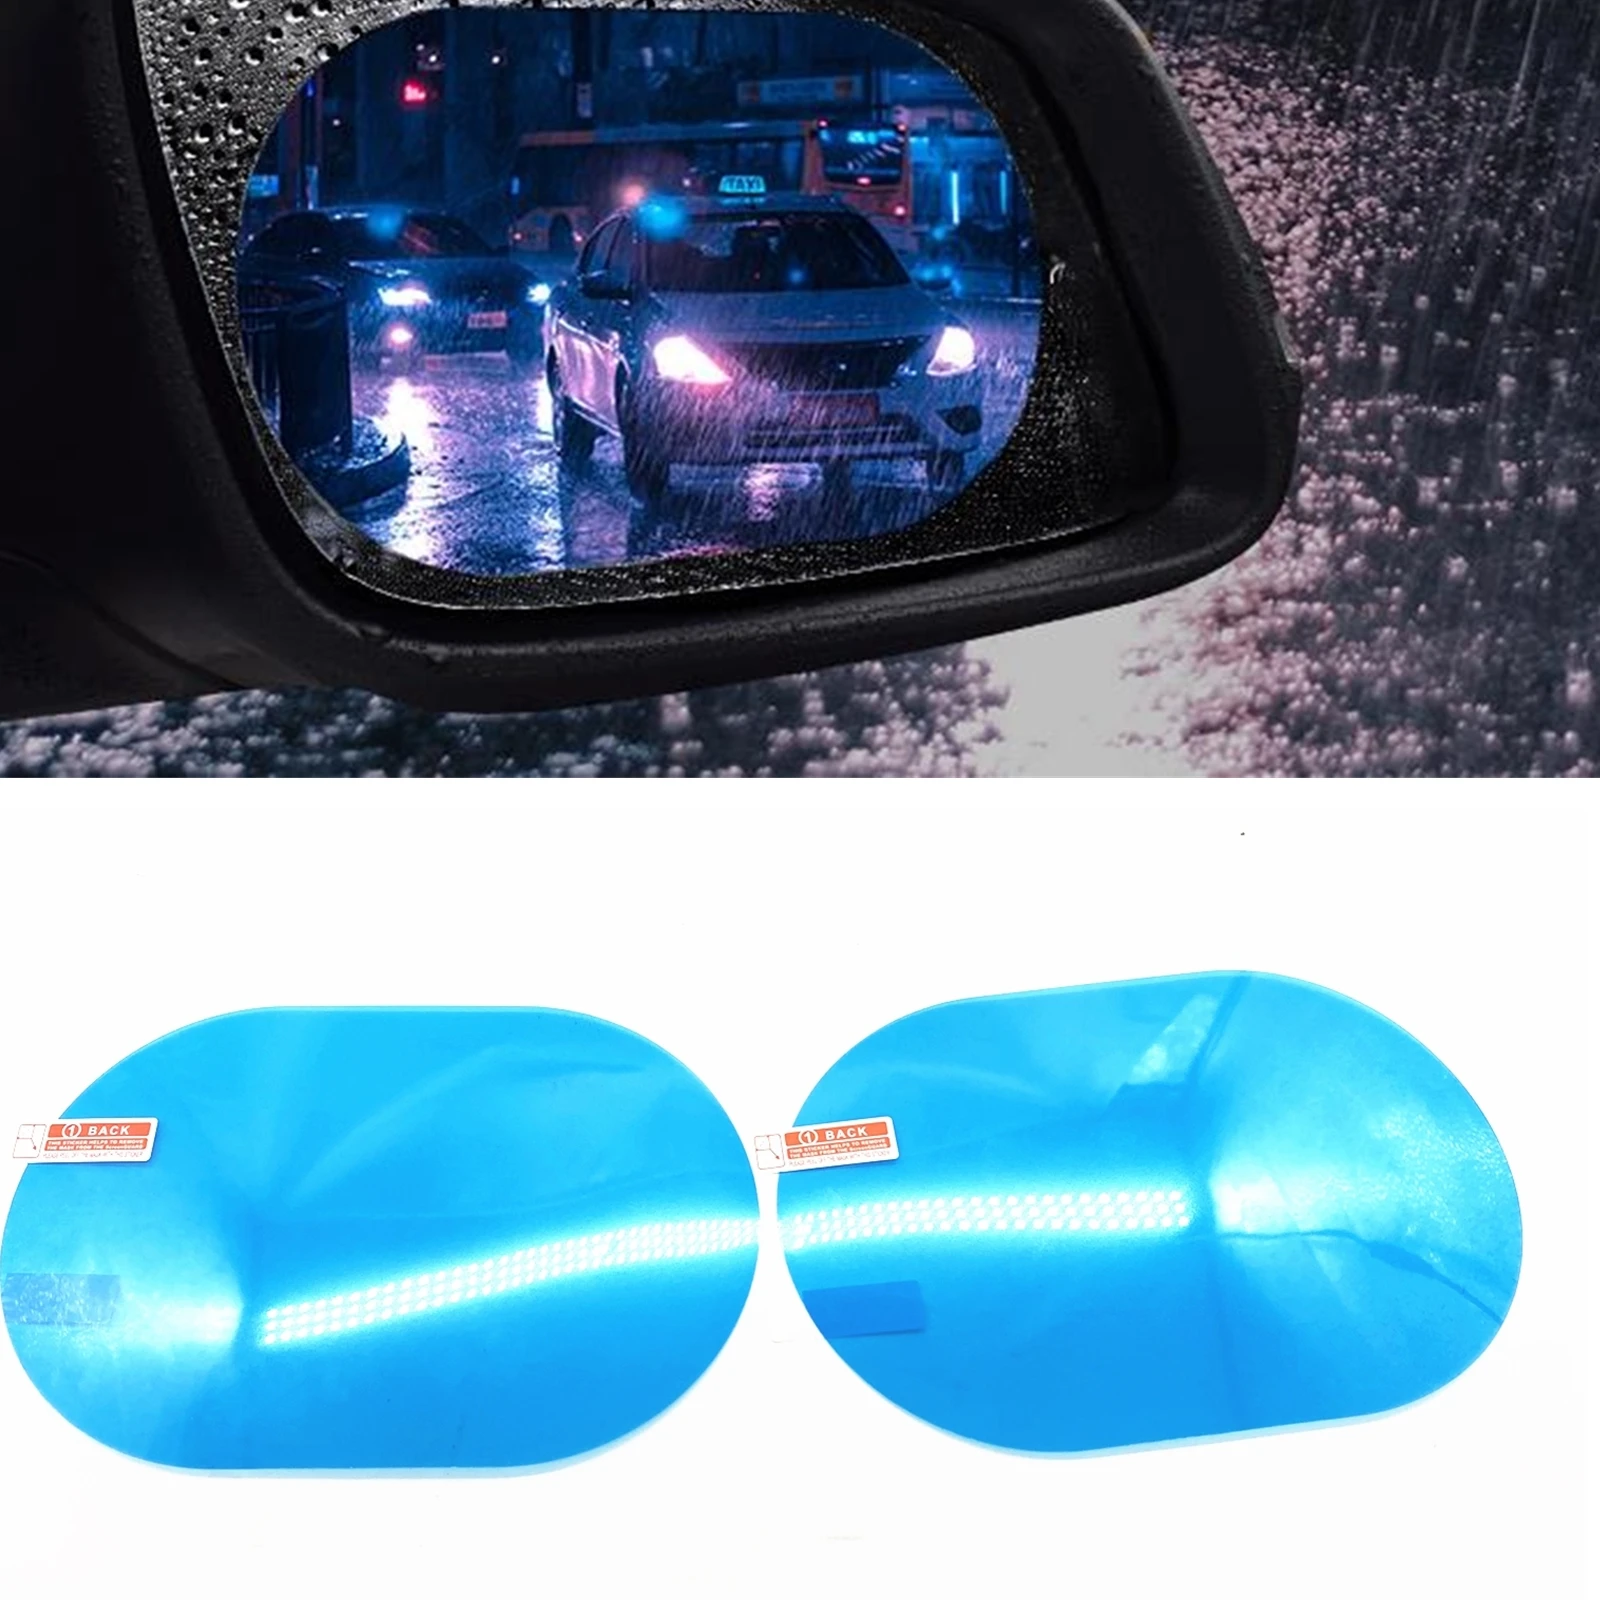 

2PCS Car Rear View Mirror Film Stickers Cover Rainproof Hydrophobic Reverse Glass Waterproof Mat Shade Protective Trim